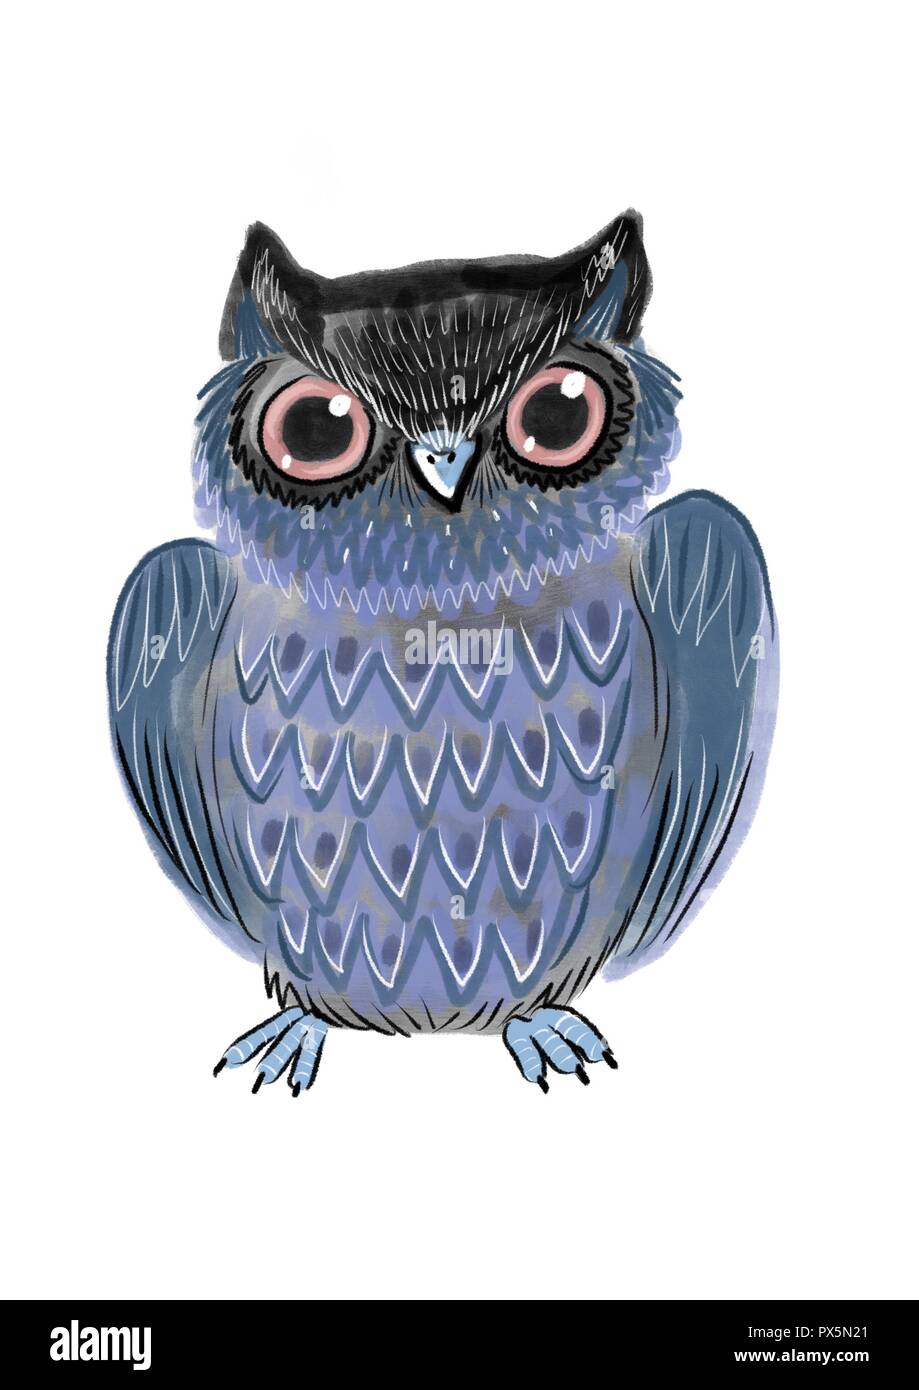 Cute owl illustration Stock Photo